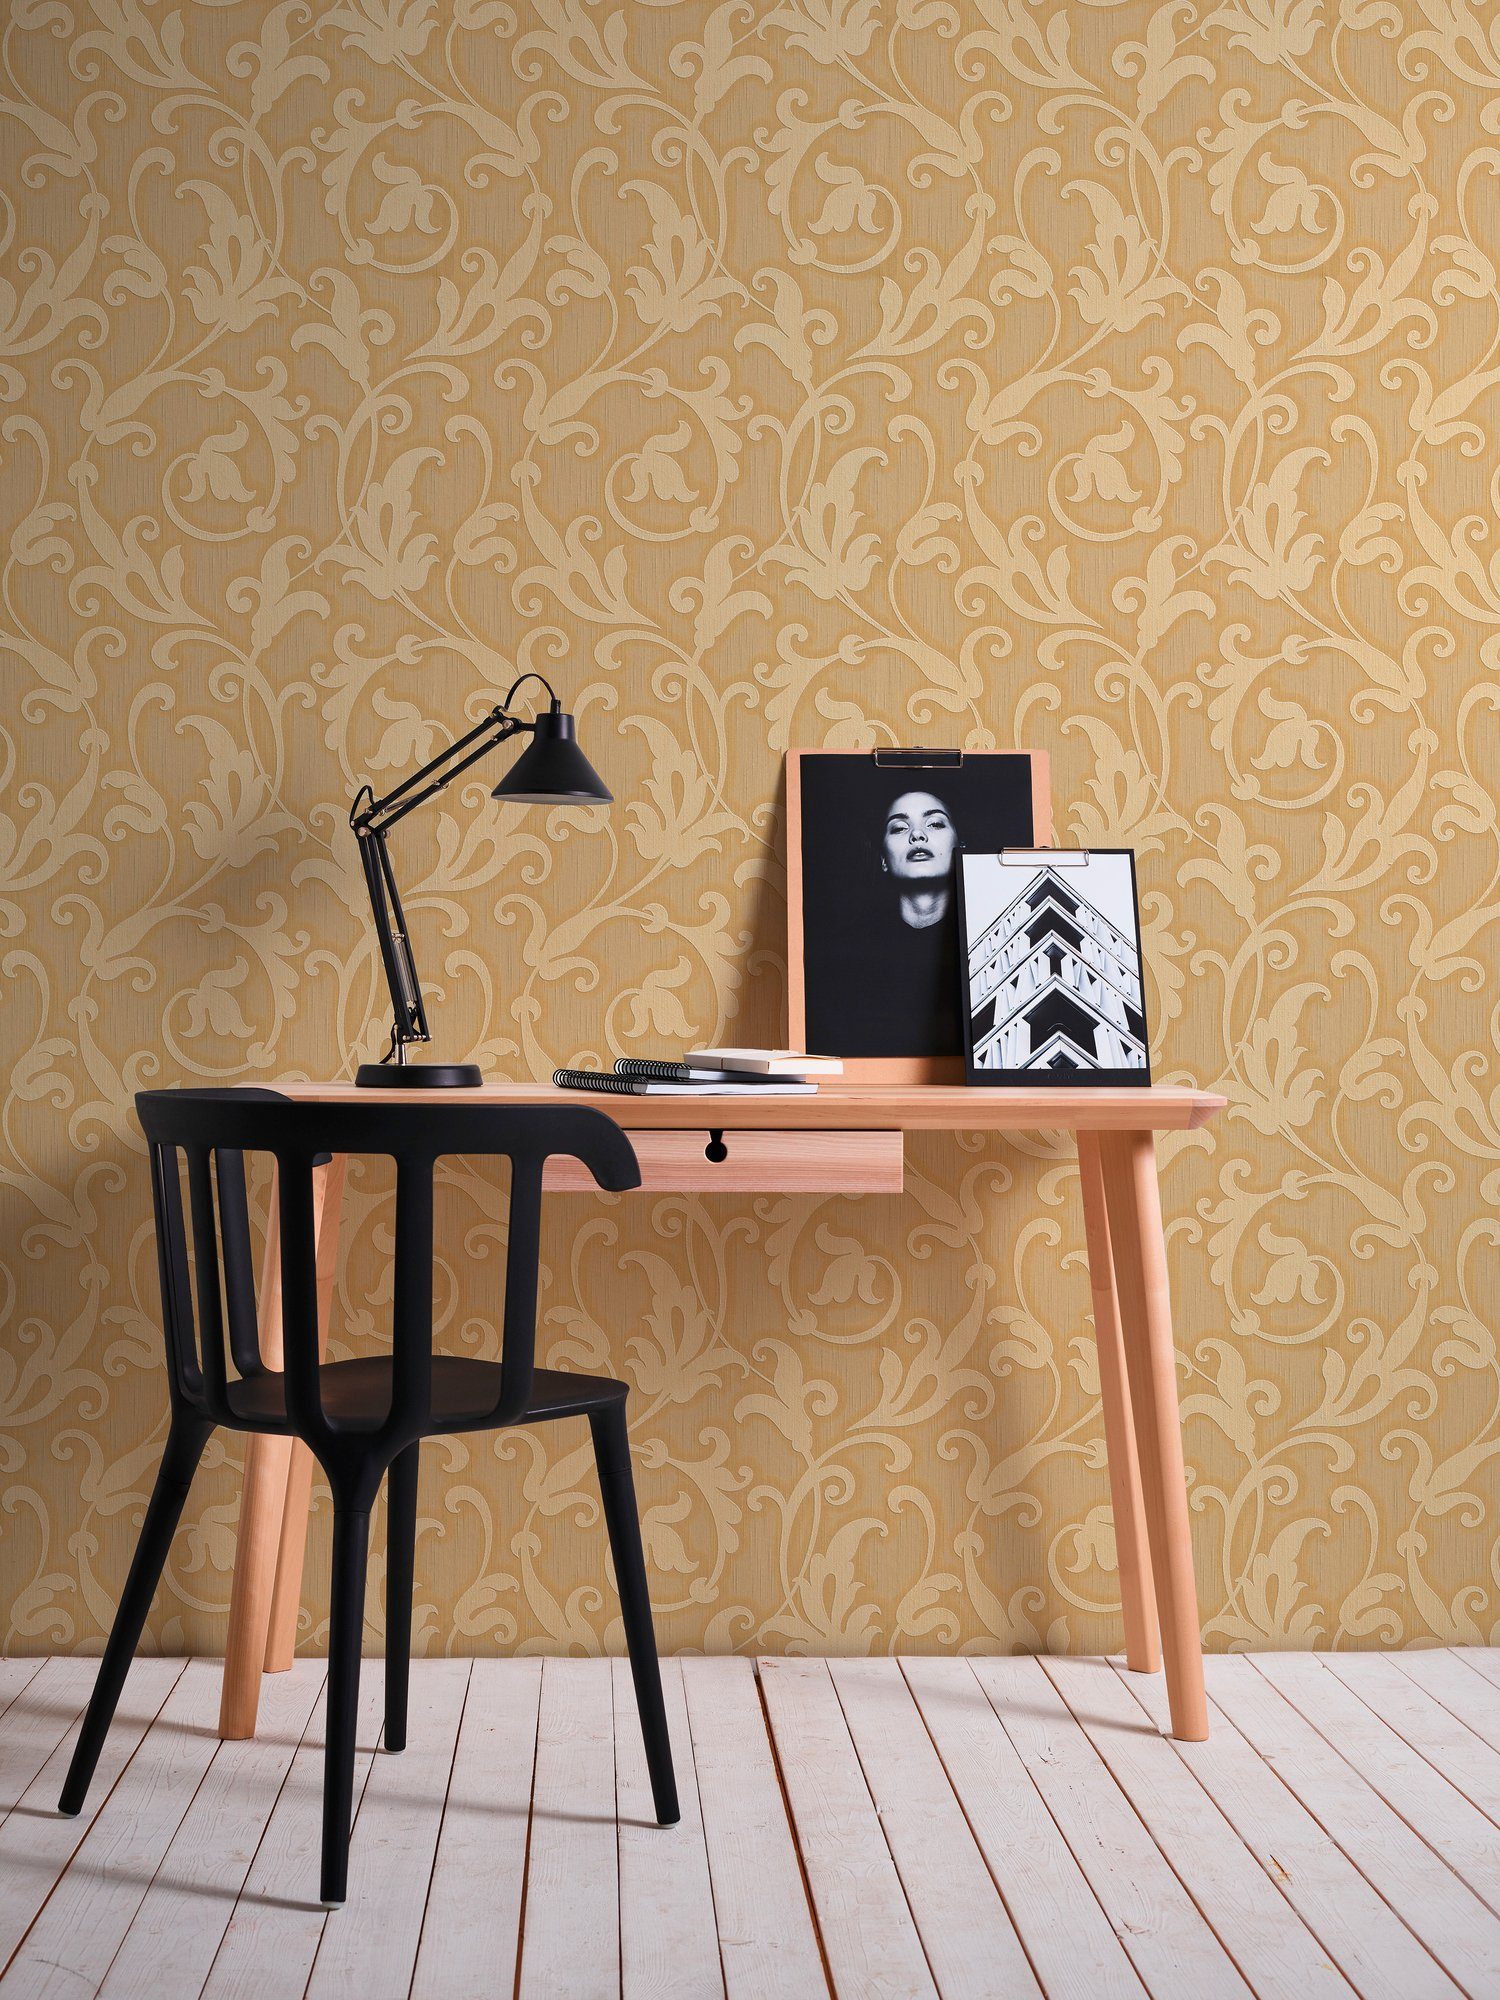 A.S. Création Architects Paper Textiltapete samtig, floral, Tessuto, Barock orange/gold/gelb Tapete Barock